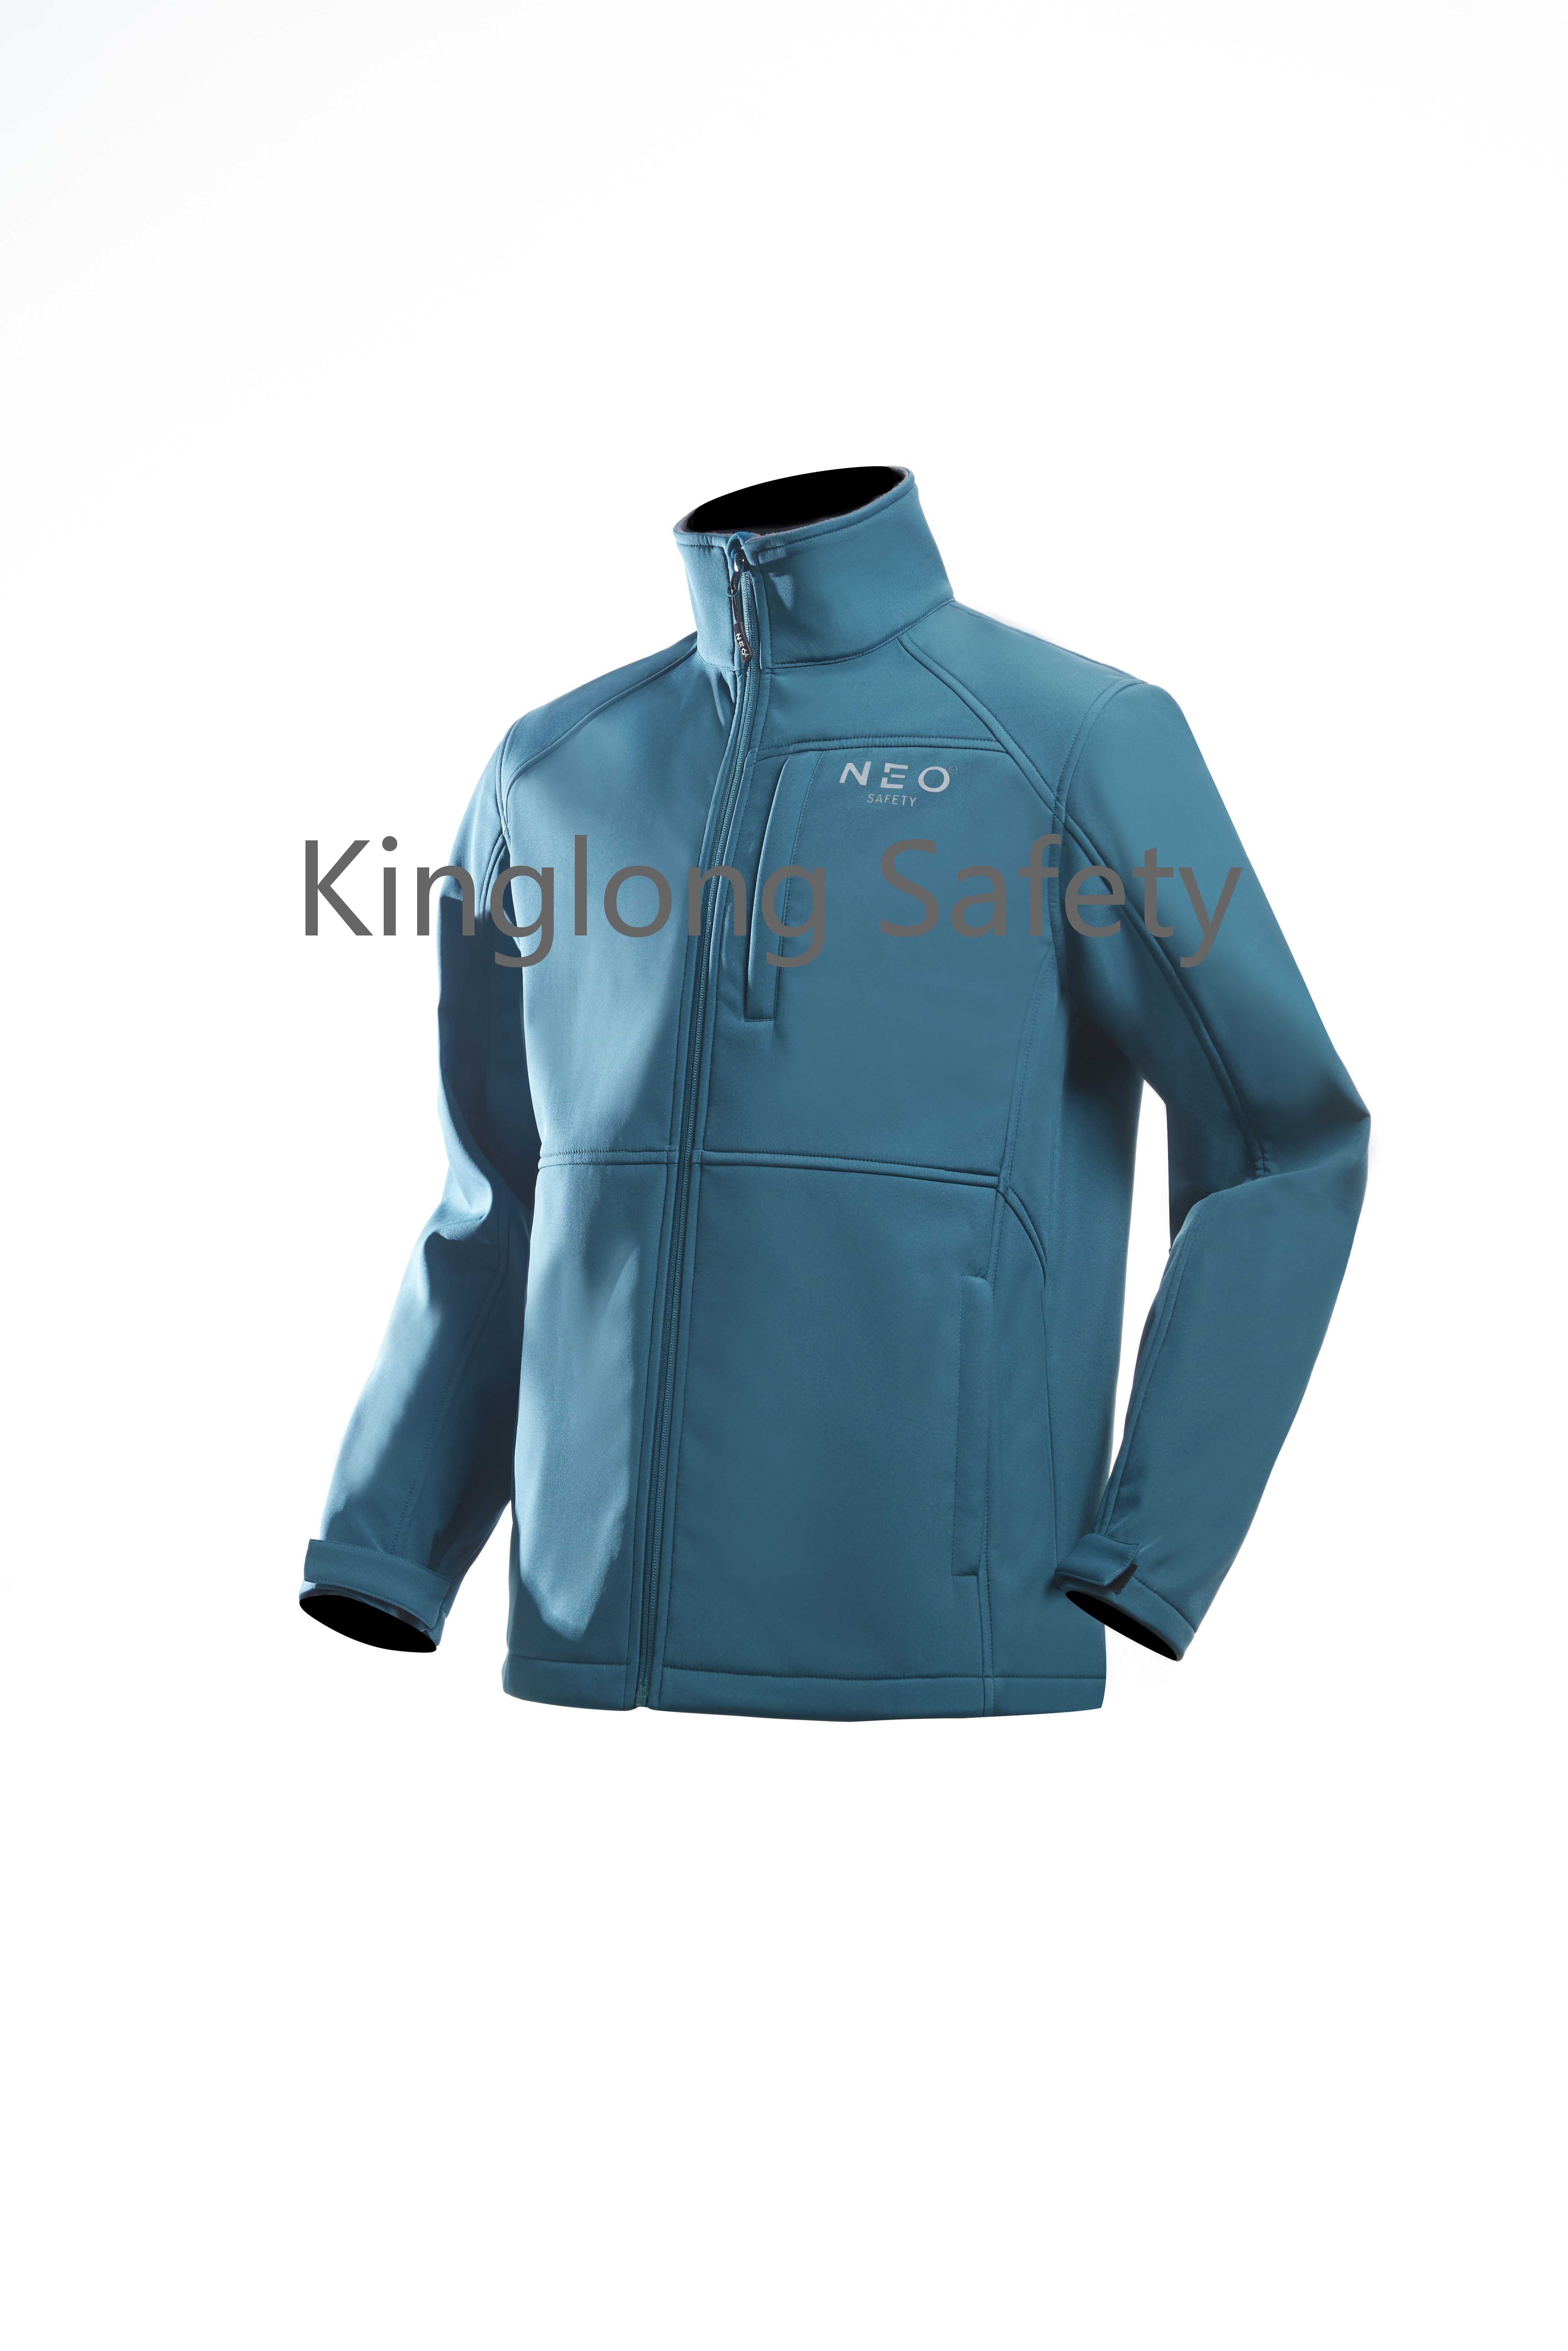 Čína OEM nový cardigan zip límec modré barvy větruodolná softshellová bunda Čína dodává barevnou kombinaci softshellová bunda výrobce